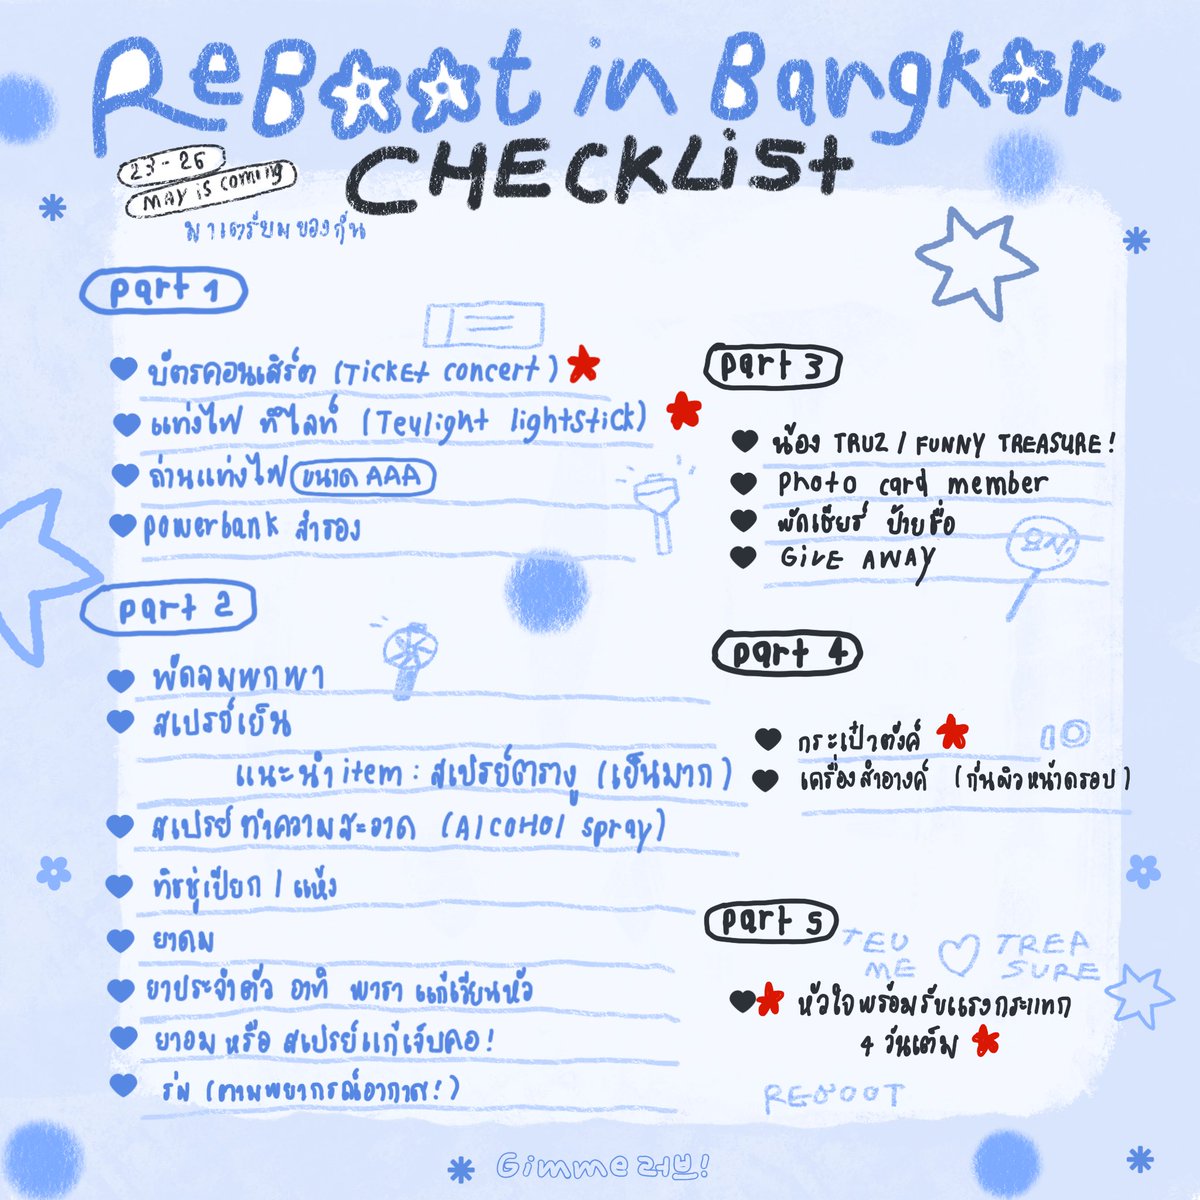 D-15 มาเก็บ checklist เตรียมของไปคอนเสิร์ตน้องสมับติกันฮับ 
version ขยันพกของ 🩵⭐️ 

#TREASURE_REBOOT_IN_BKK 
#TREASURE_reboot_in_bangkok